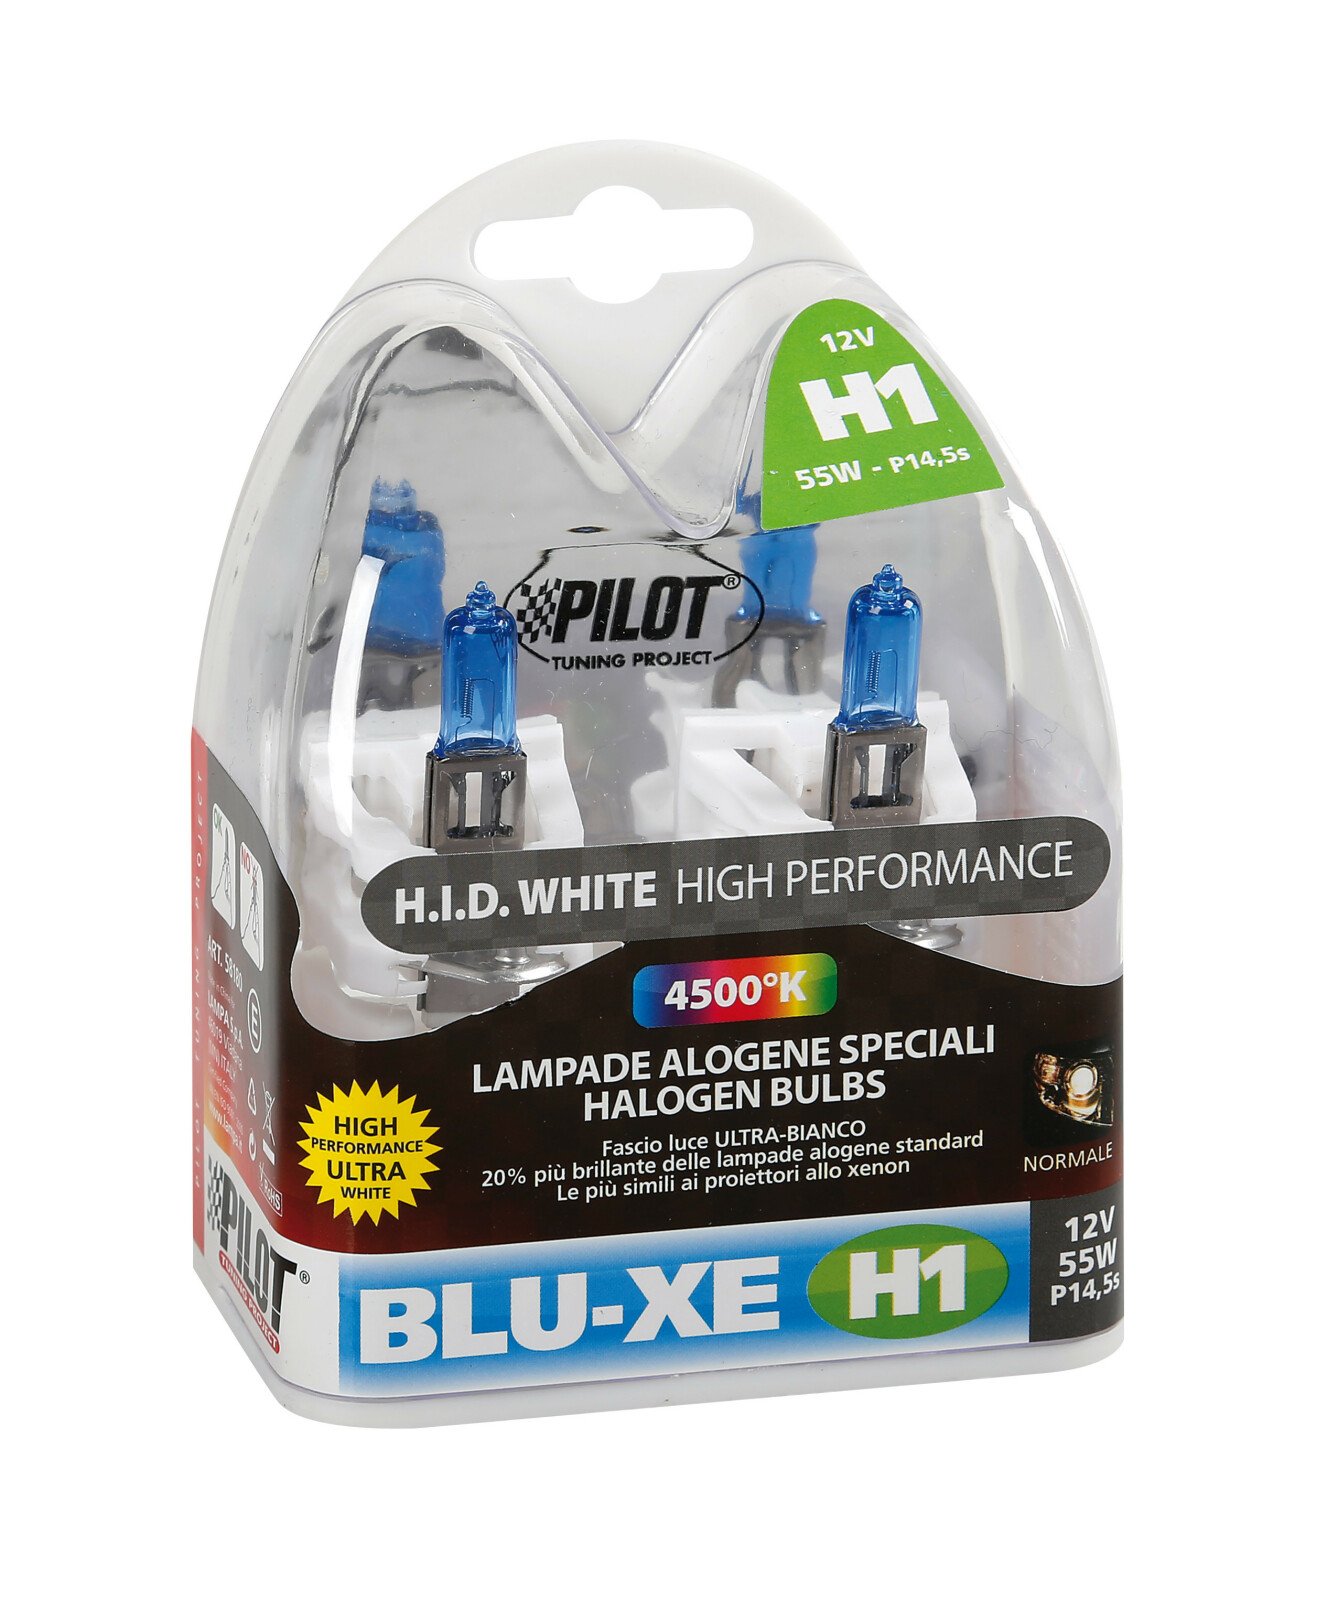 Bec halogen Blu-Xe  H1 55W P14,5s 12V 2buc thumb